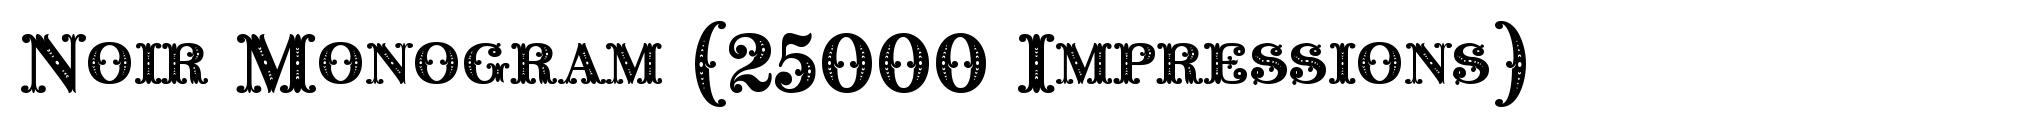 Noir Monogram (25000 Impressions) image